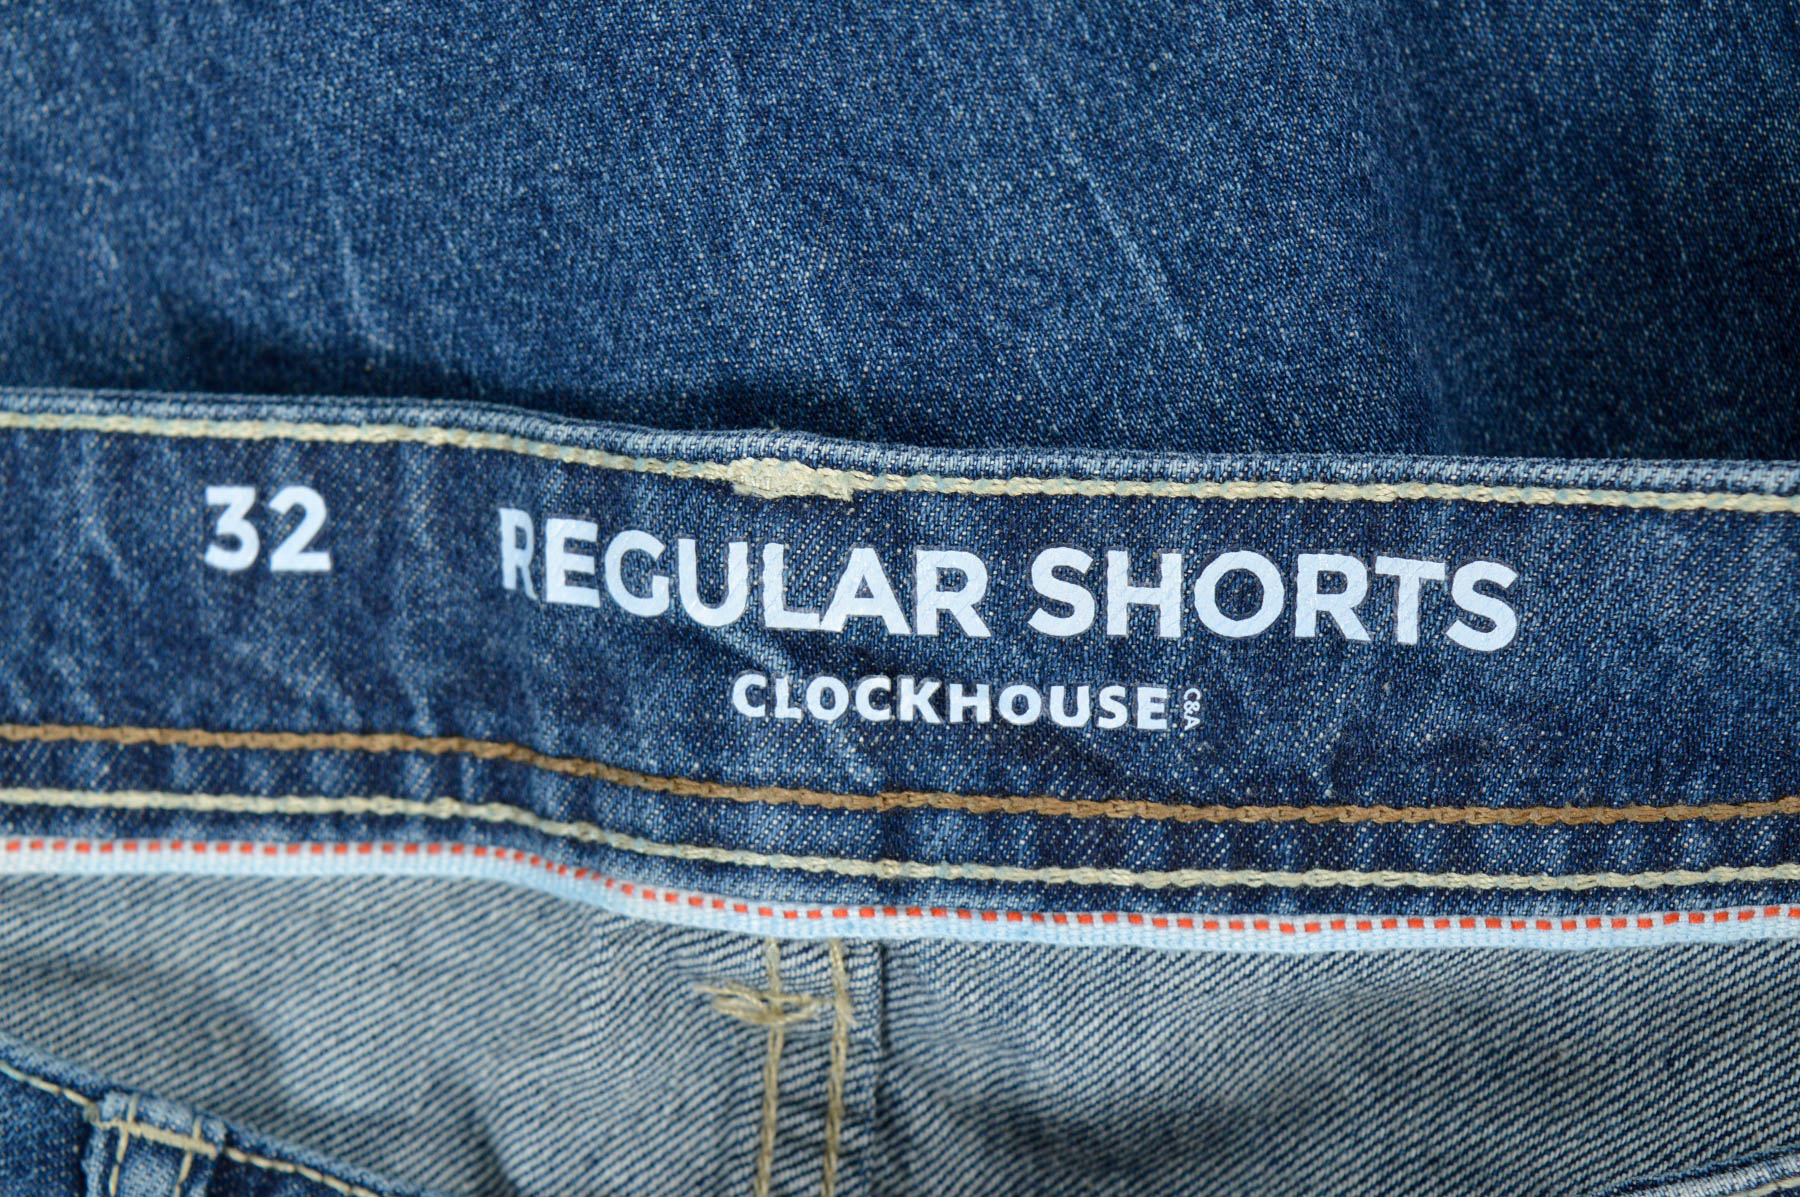 Men's shorts - Clockhouse - 2